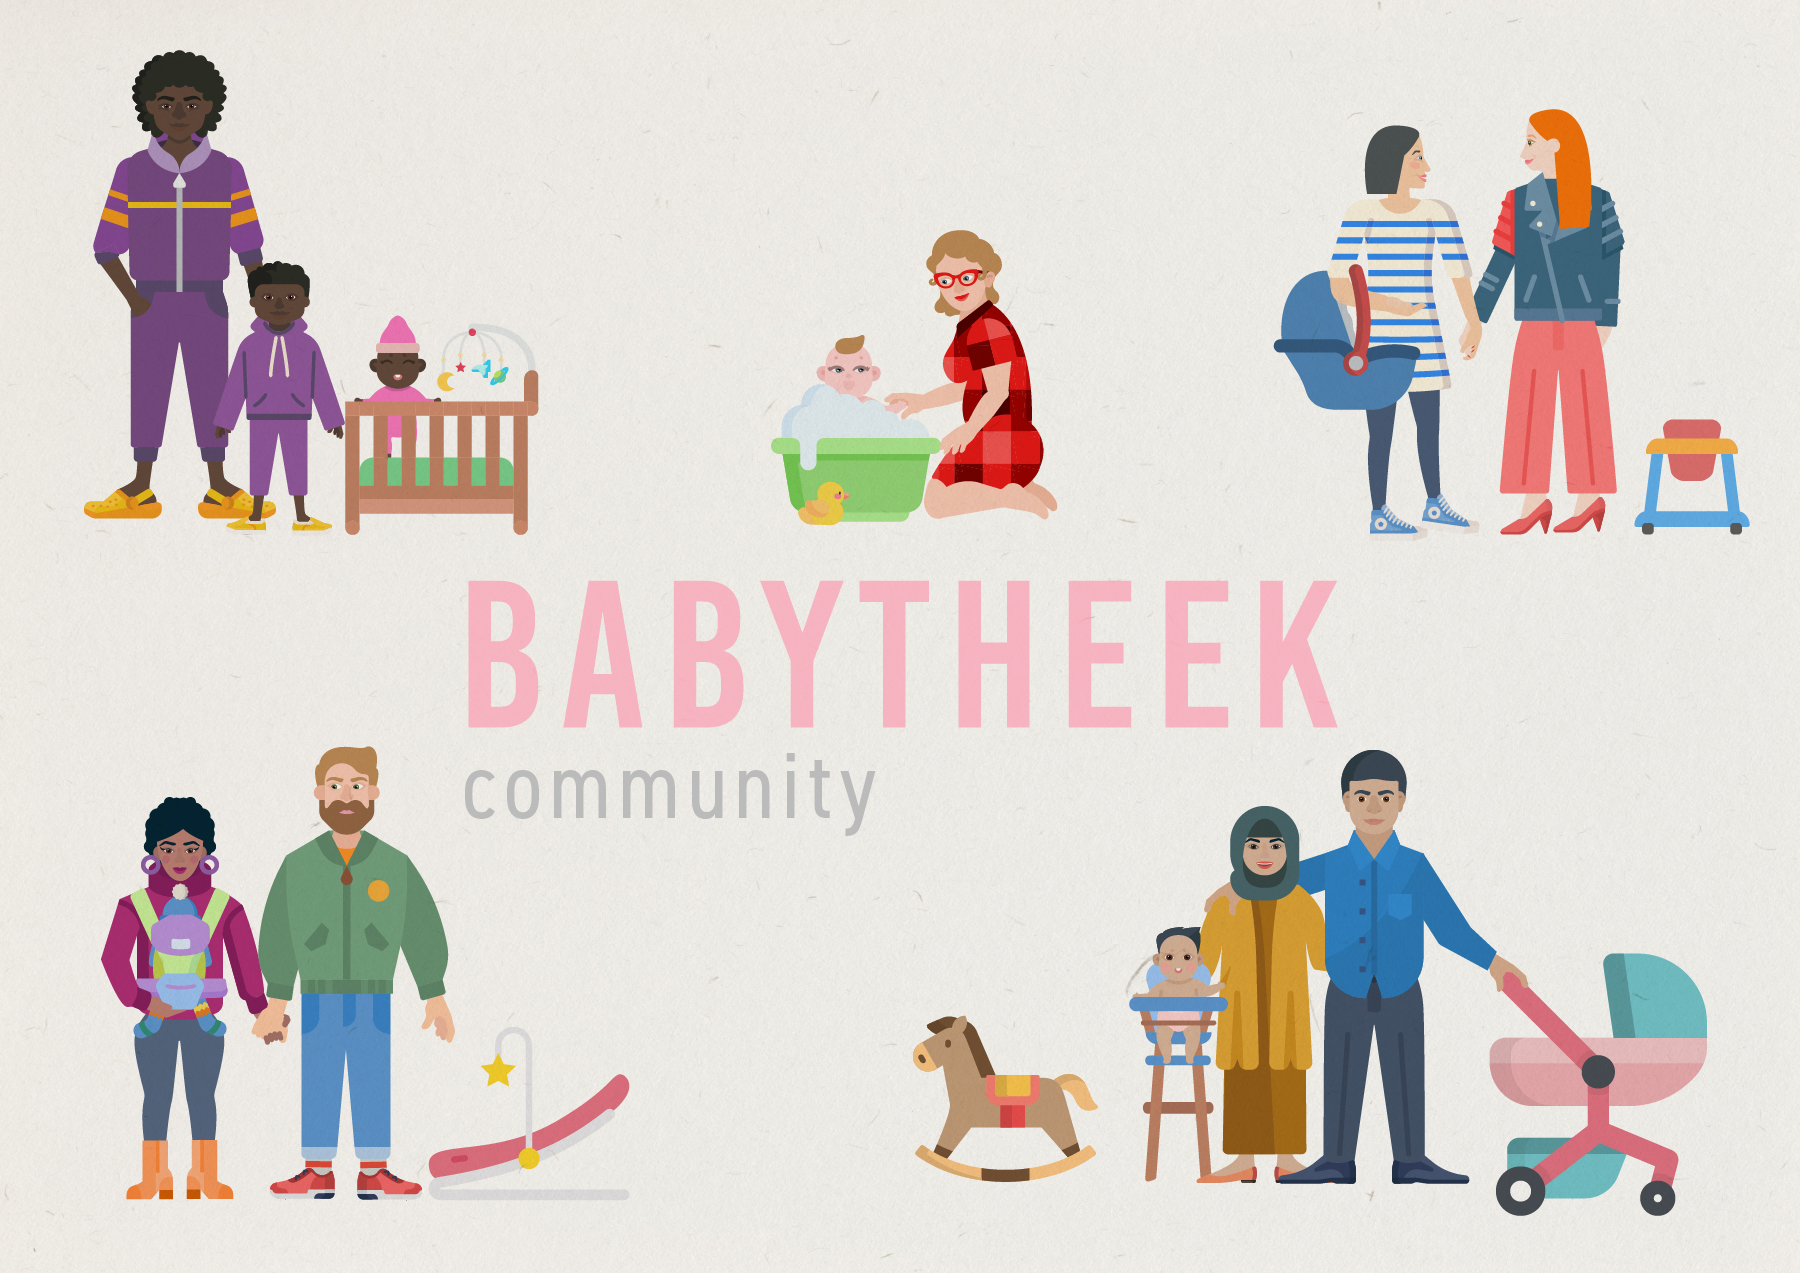 Babytheek community illustration